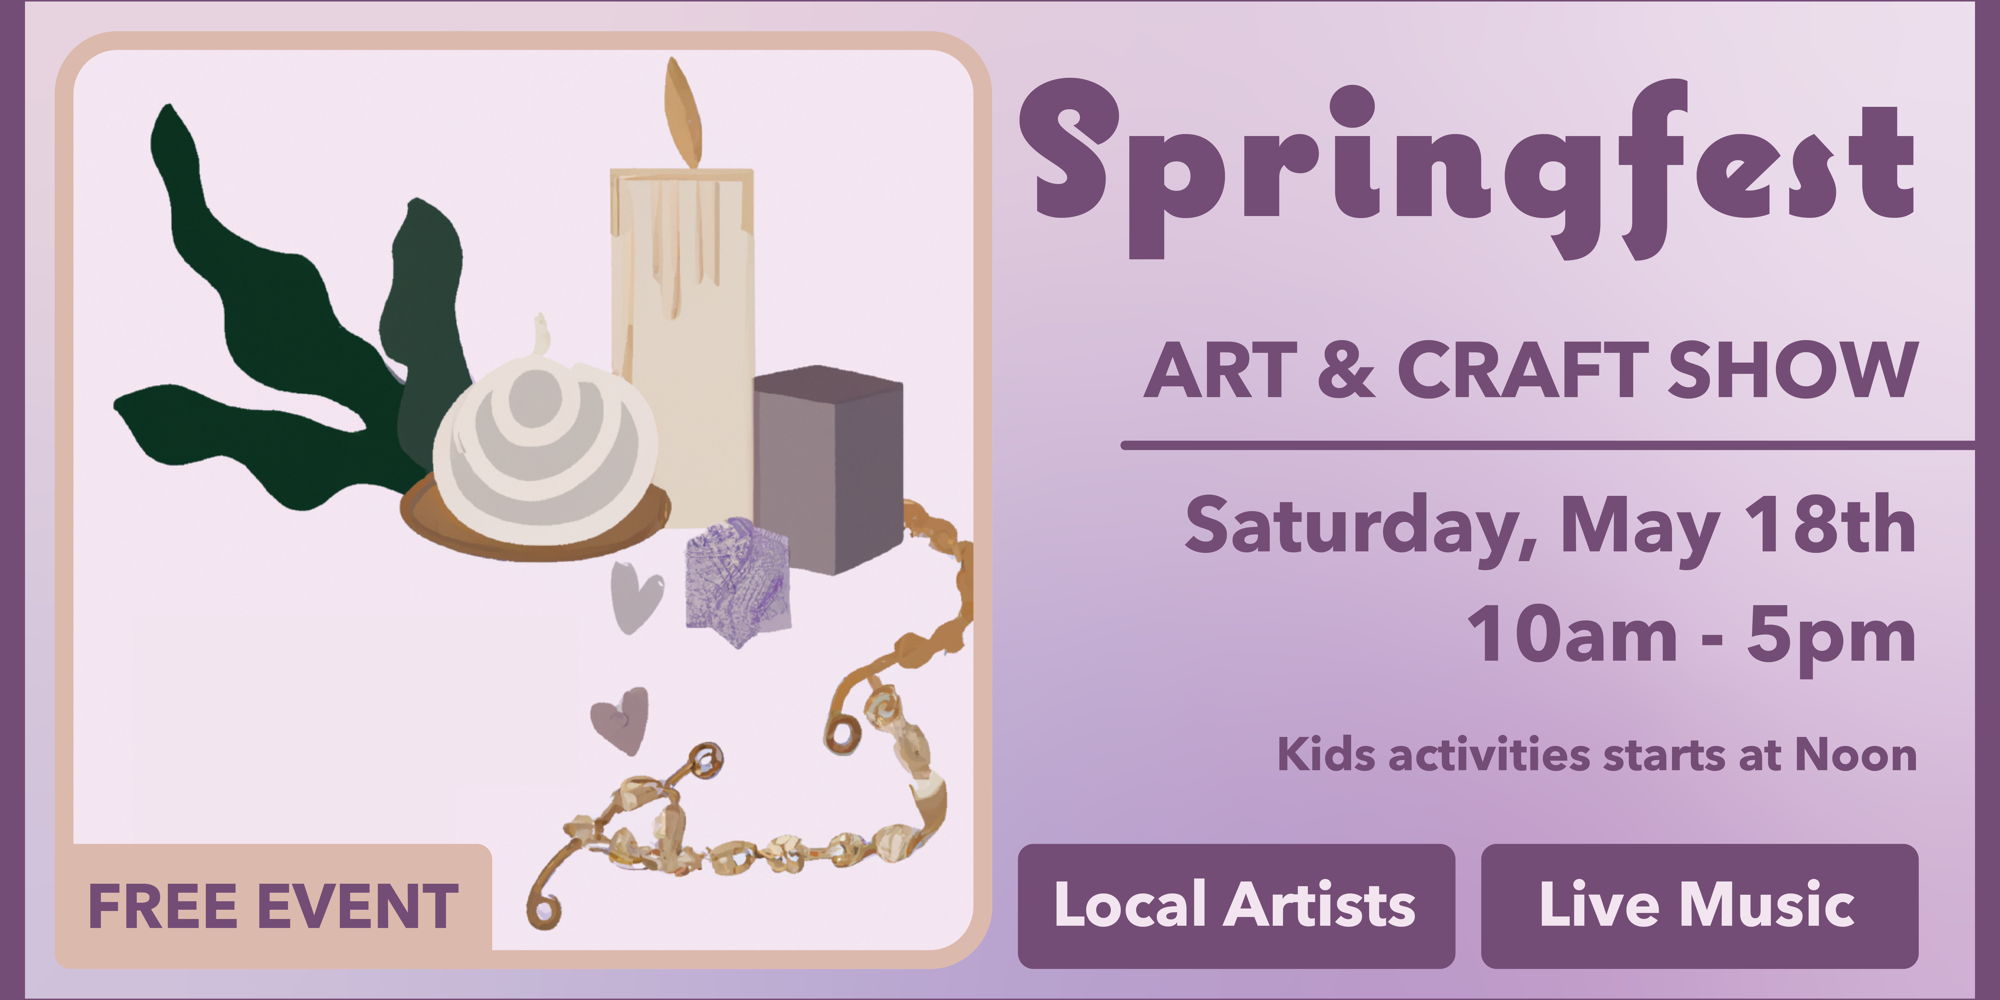 Springfest Art & Craft Show promotional image